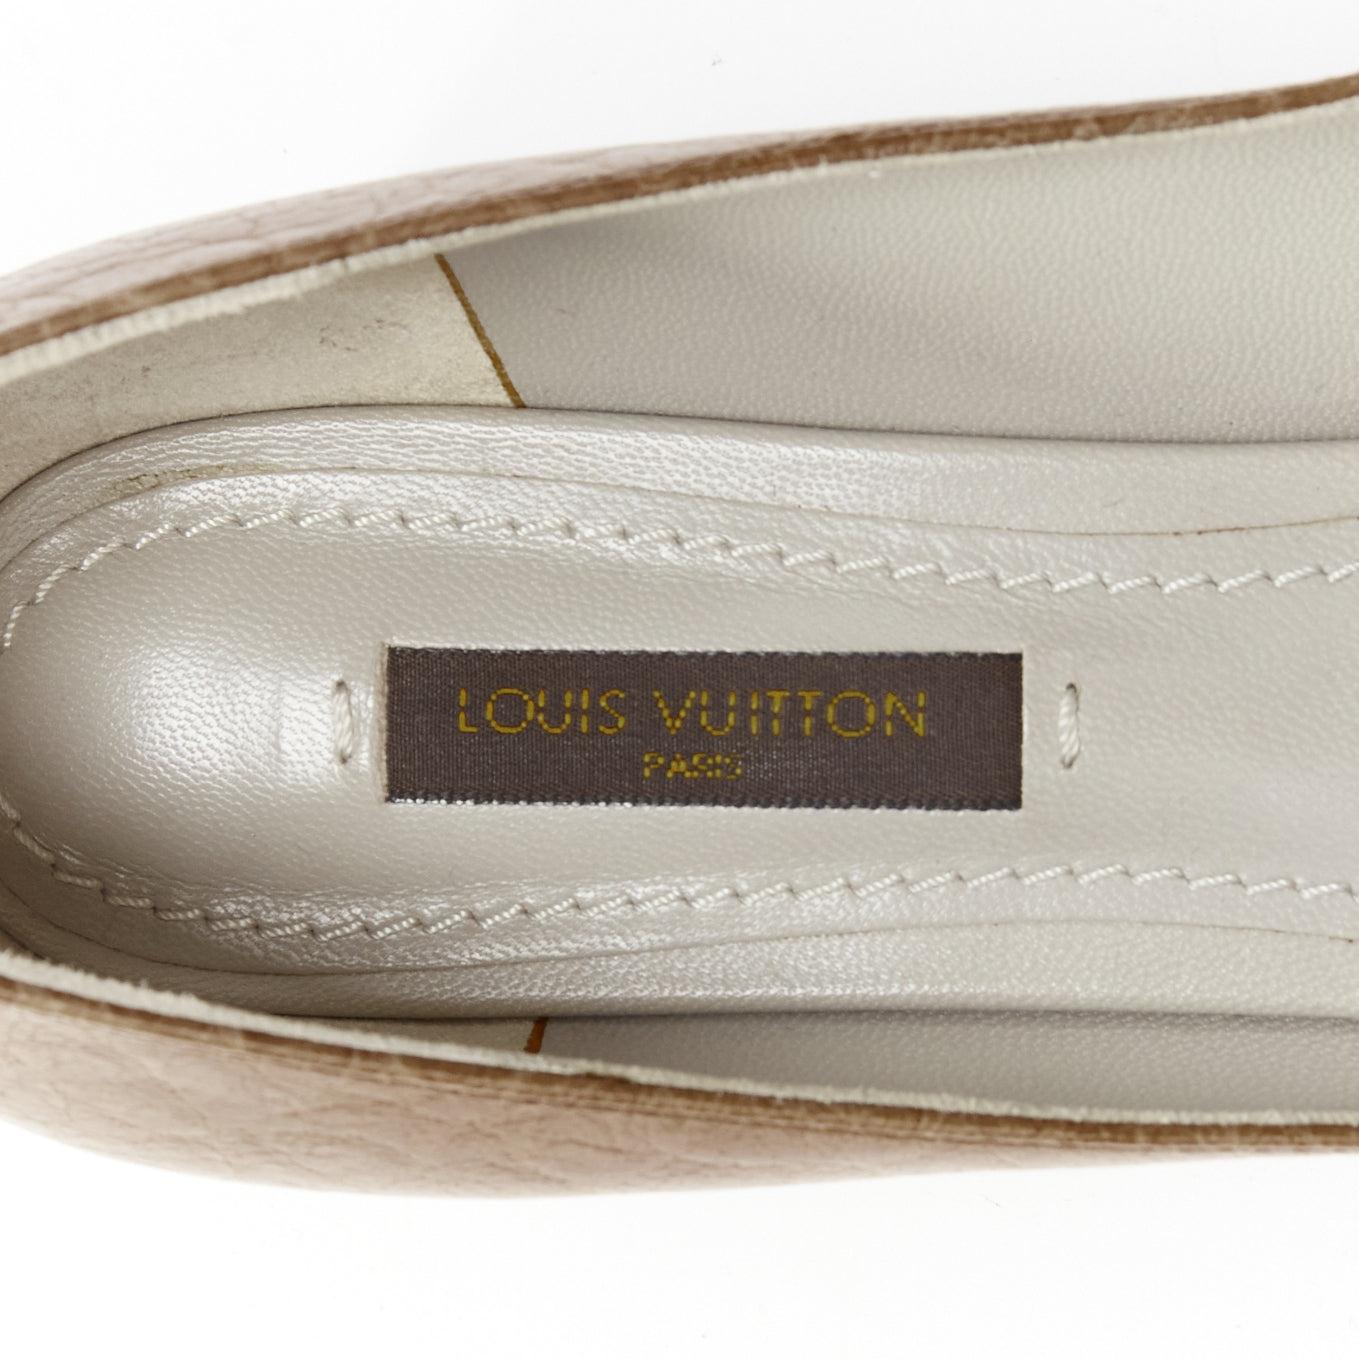 LOUS VUITTON grey textured leather oversized black bow kitten heel pump EU37 For Sale 5